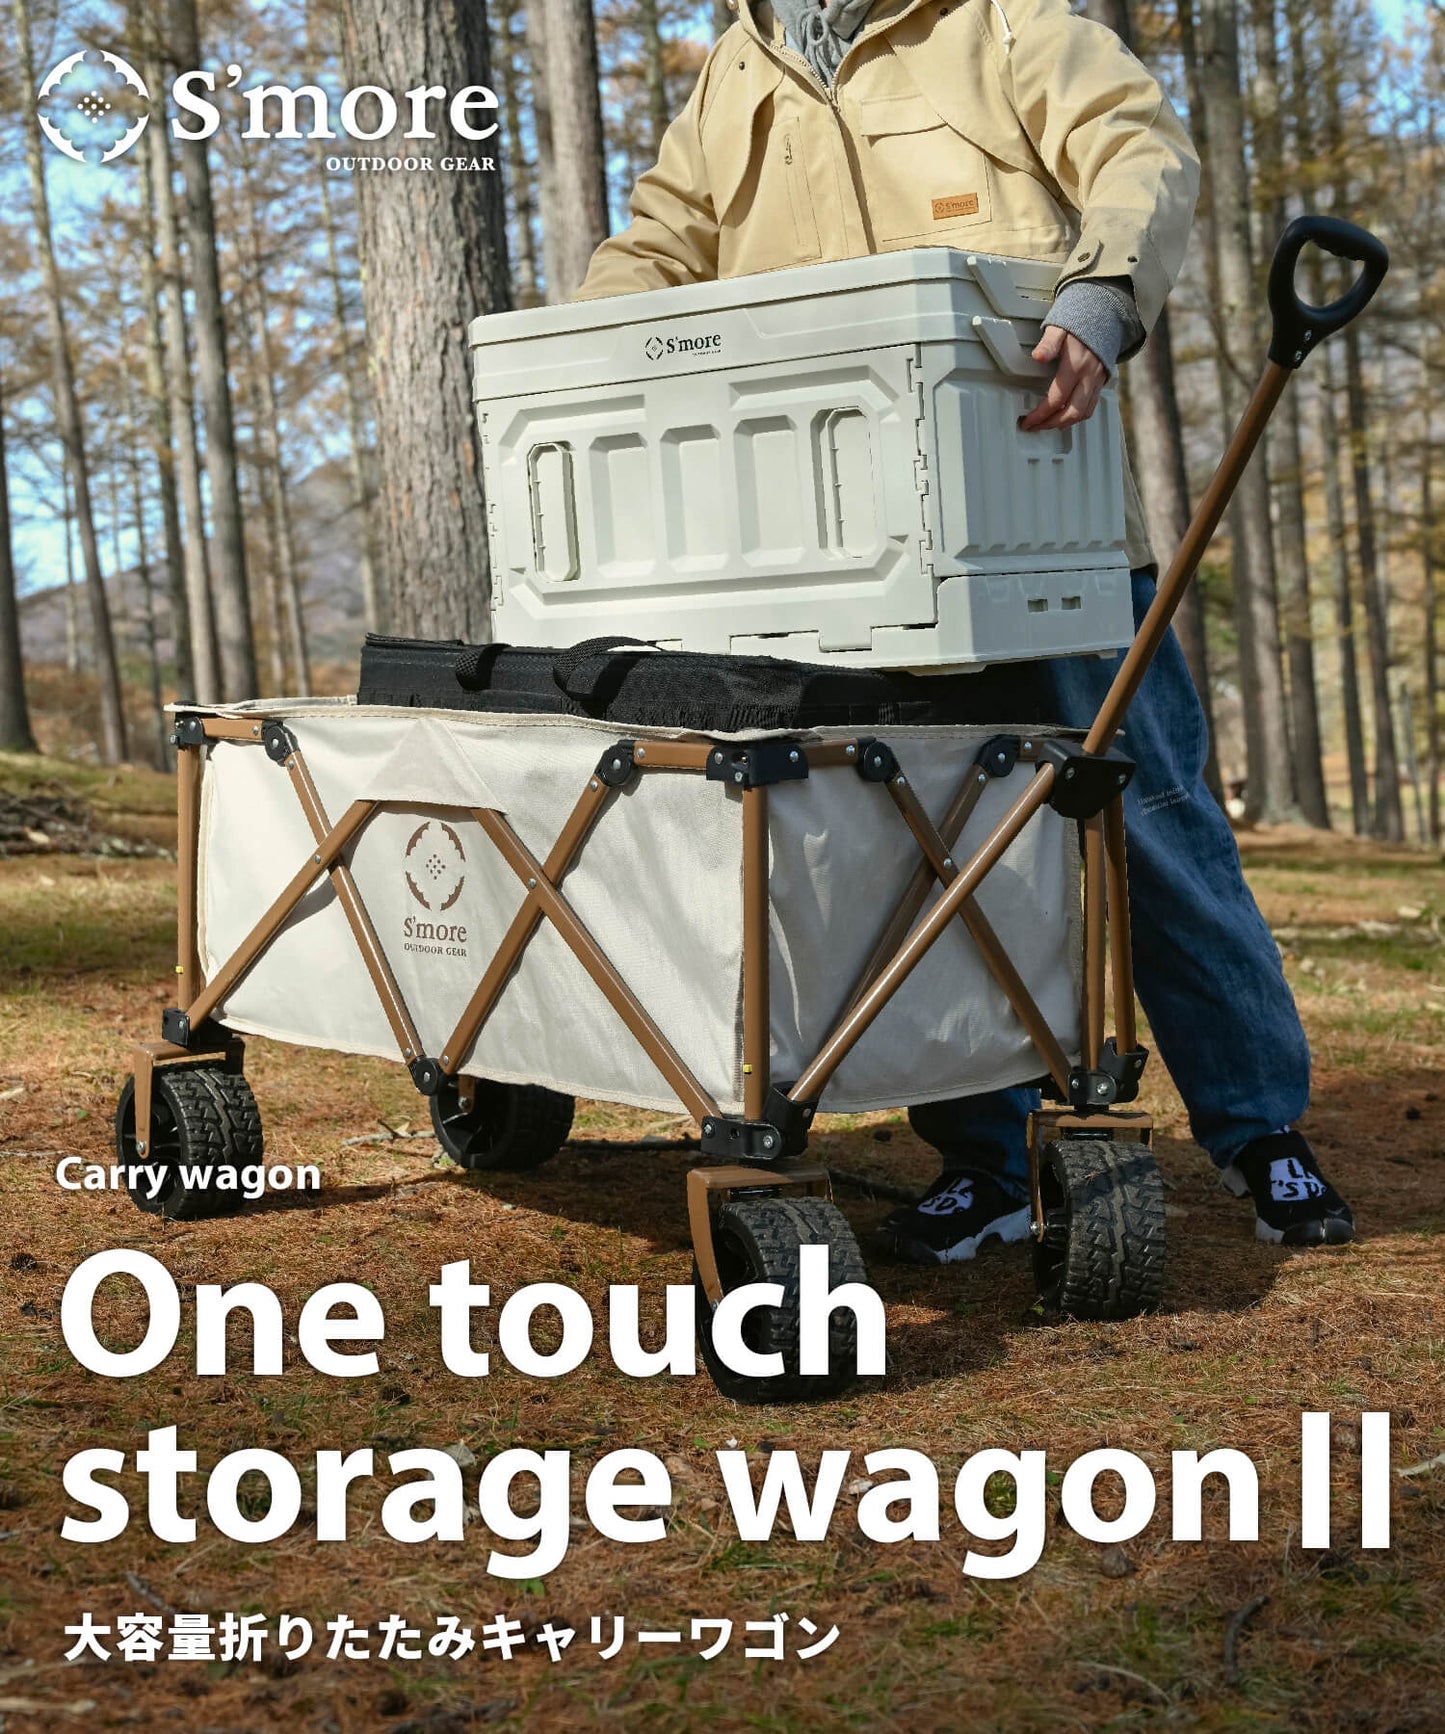 New!!【 One touch storage wagon II 】ワンタッチストレージワゴンⅡ リニューアル-大荷物を一気に運べるワゴン